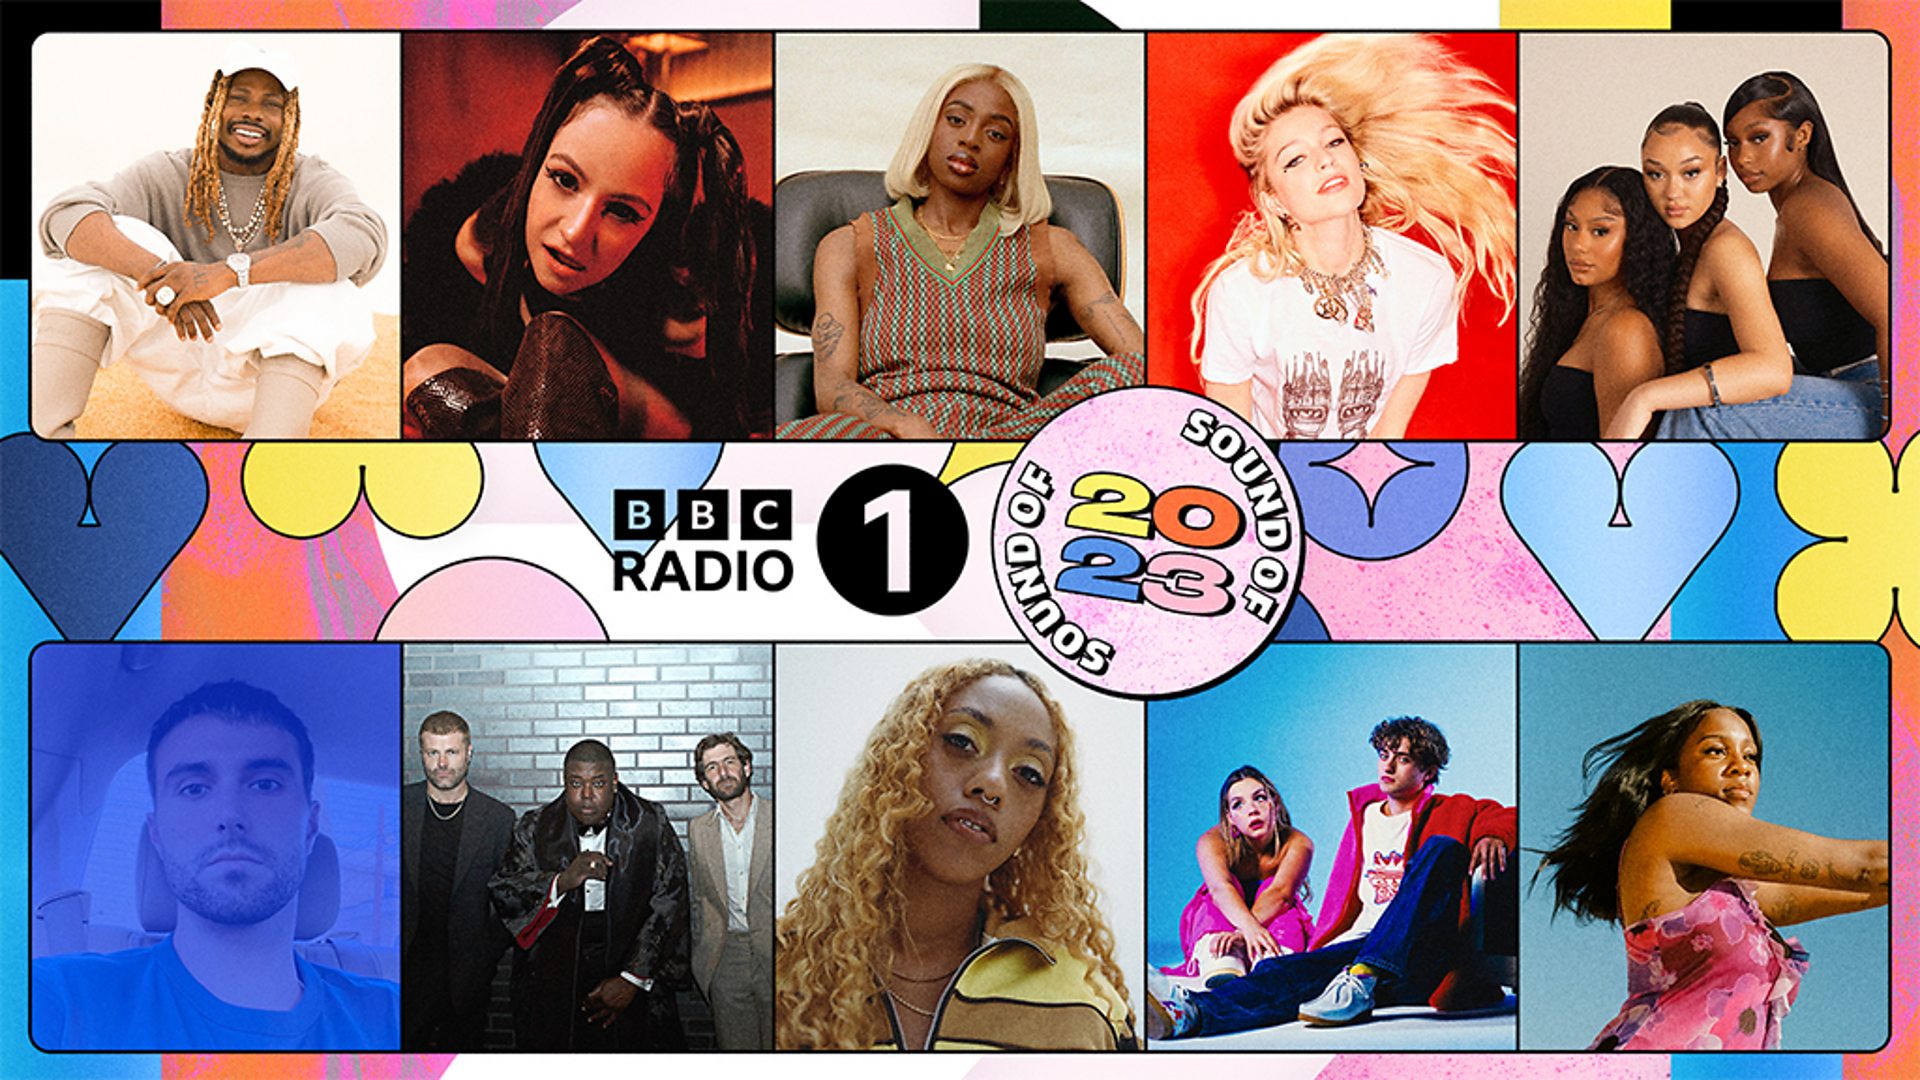 BBC Music - BBC Music Introducing - BBC Music Introducing at Glastonbury  2023